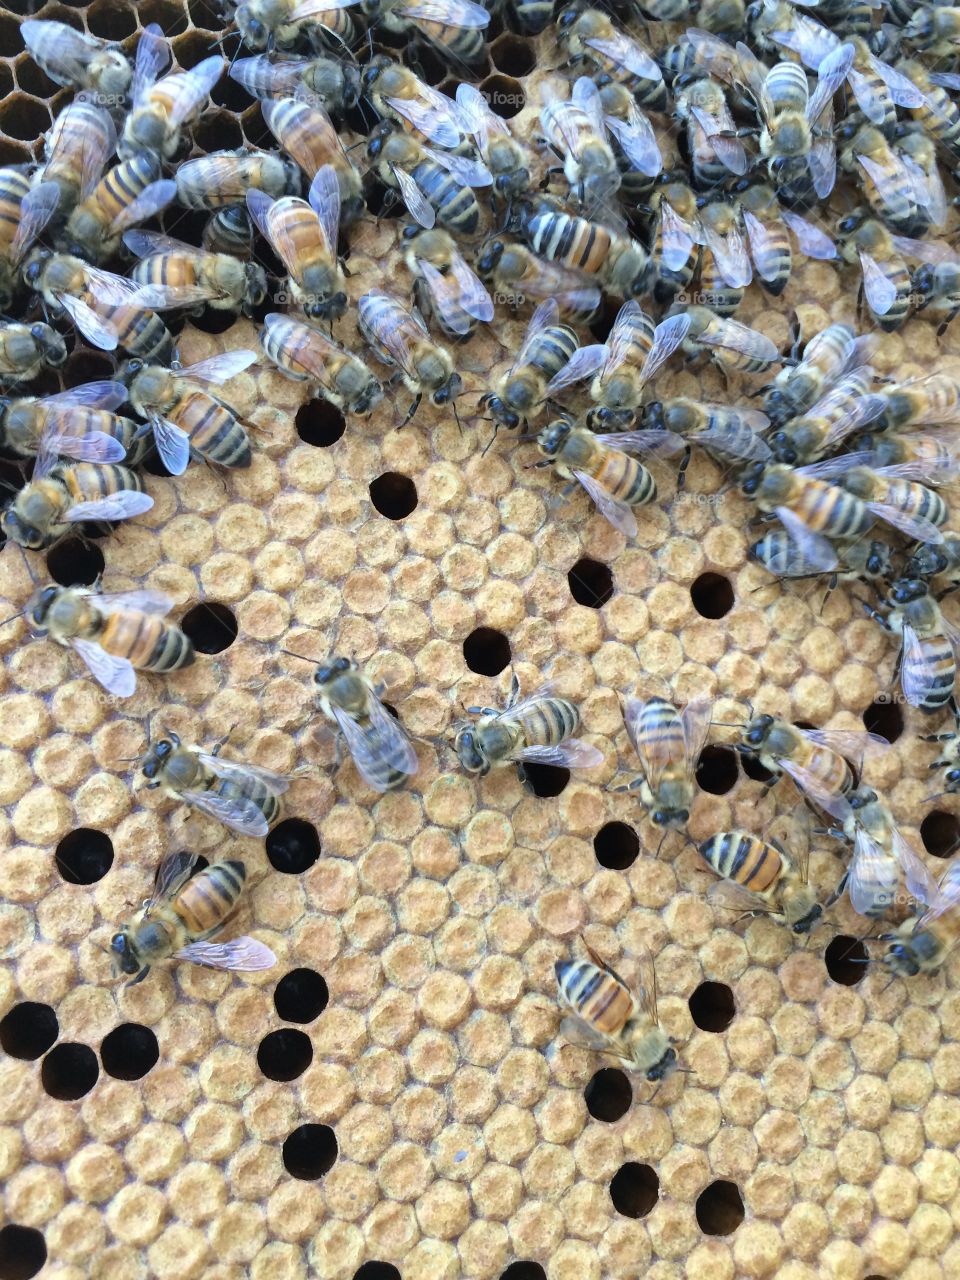 Honeybees working hard. 